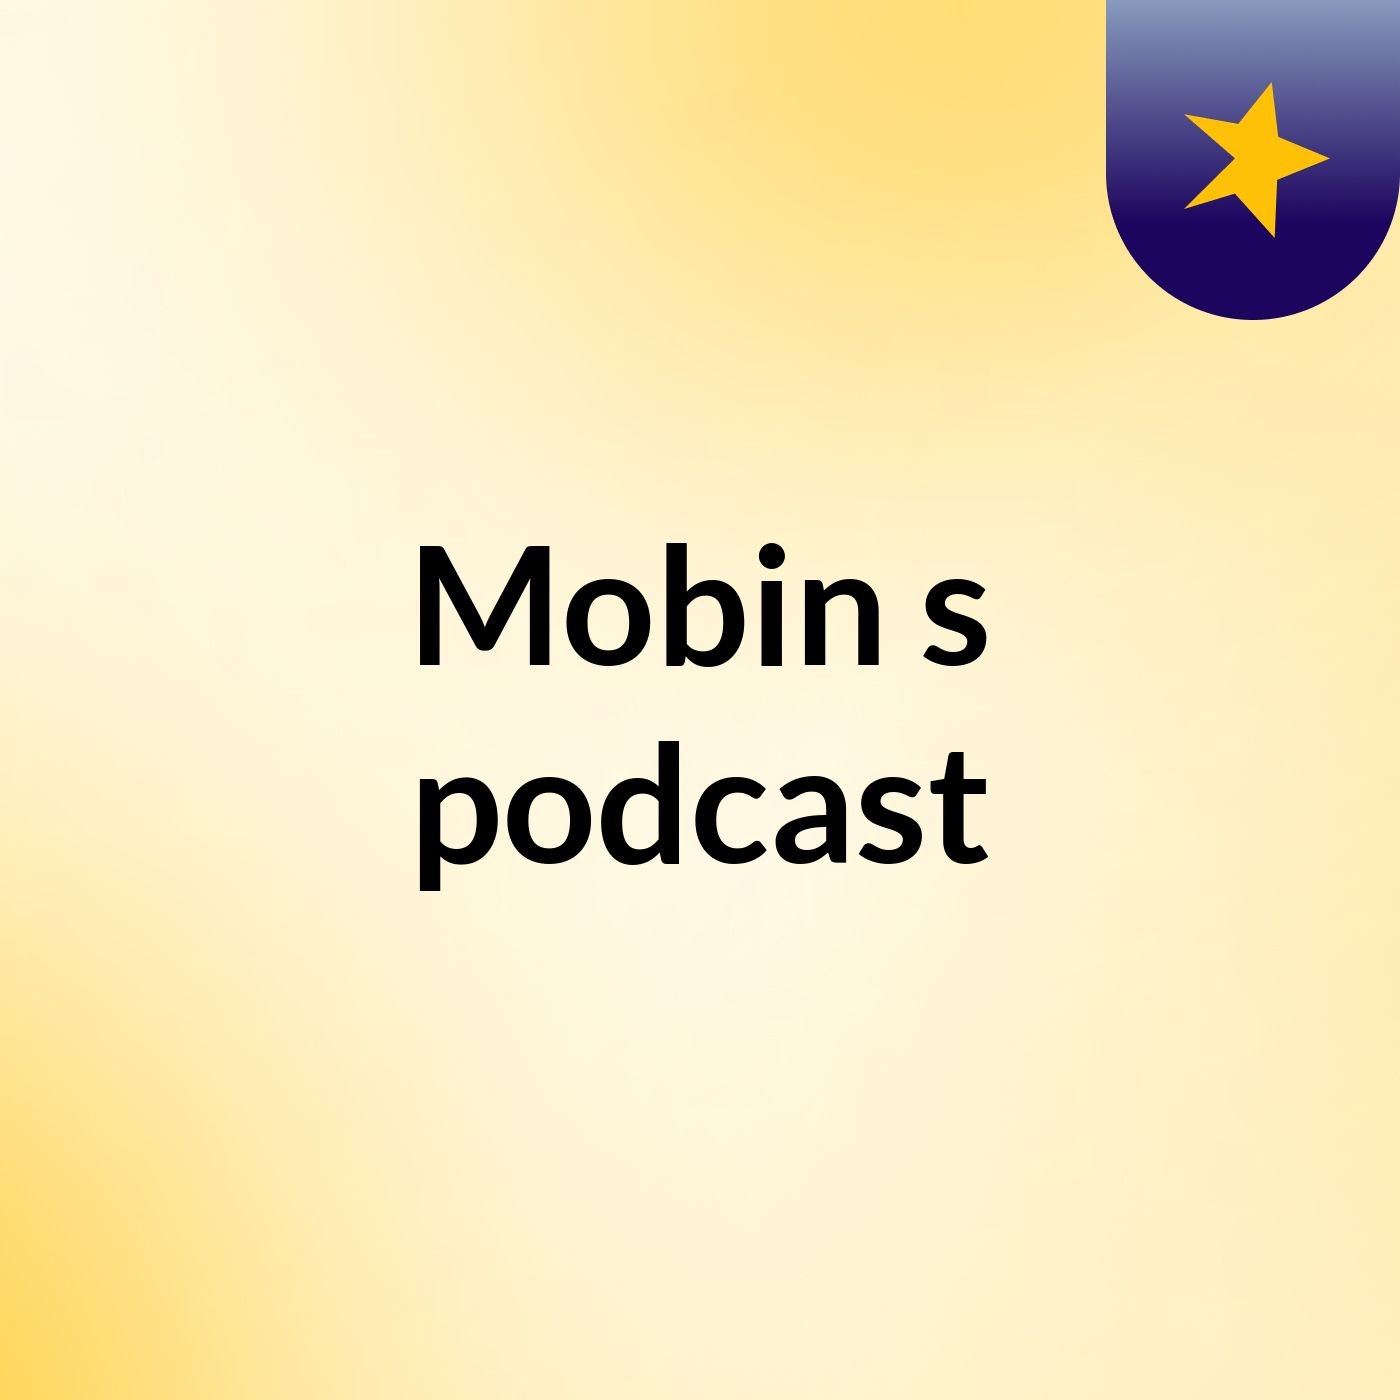 Episode 4 - Mobin's podcast